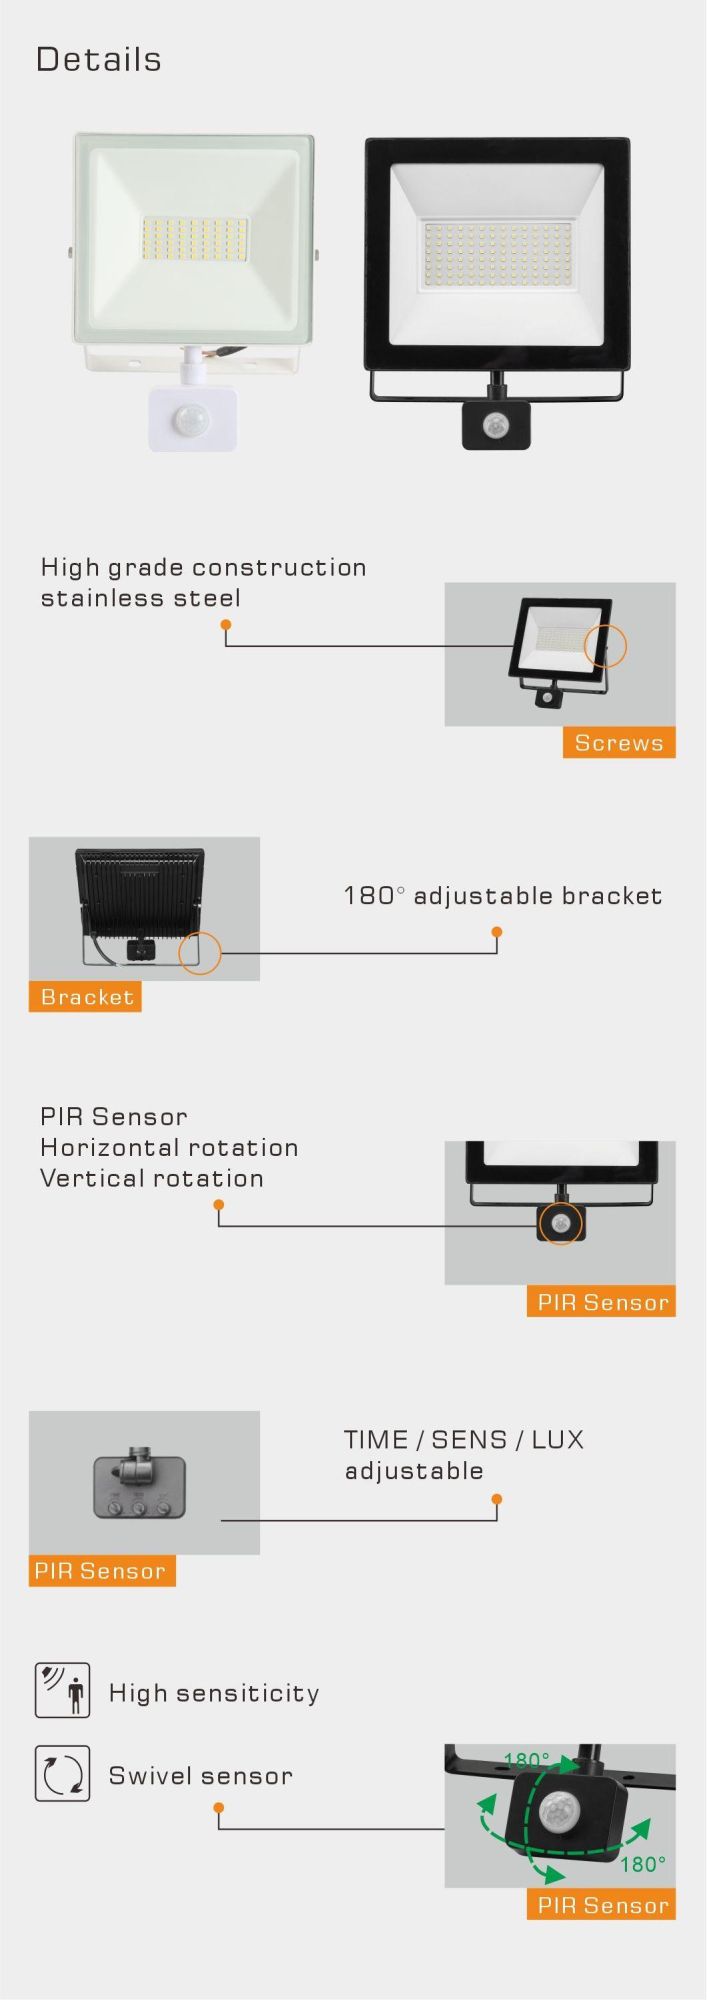 Motion Sensor Floodlight RoHS ERP Adjustable Outdoor LED Floodlight with PIR Sensor